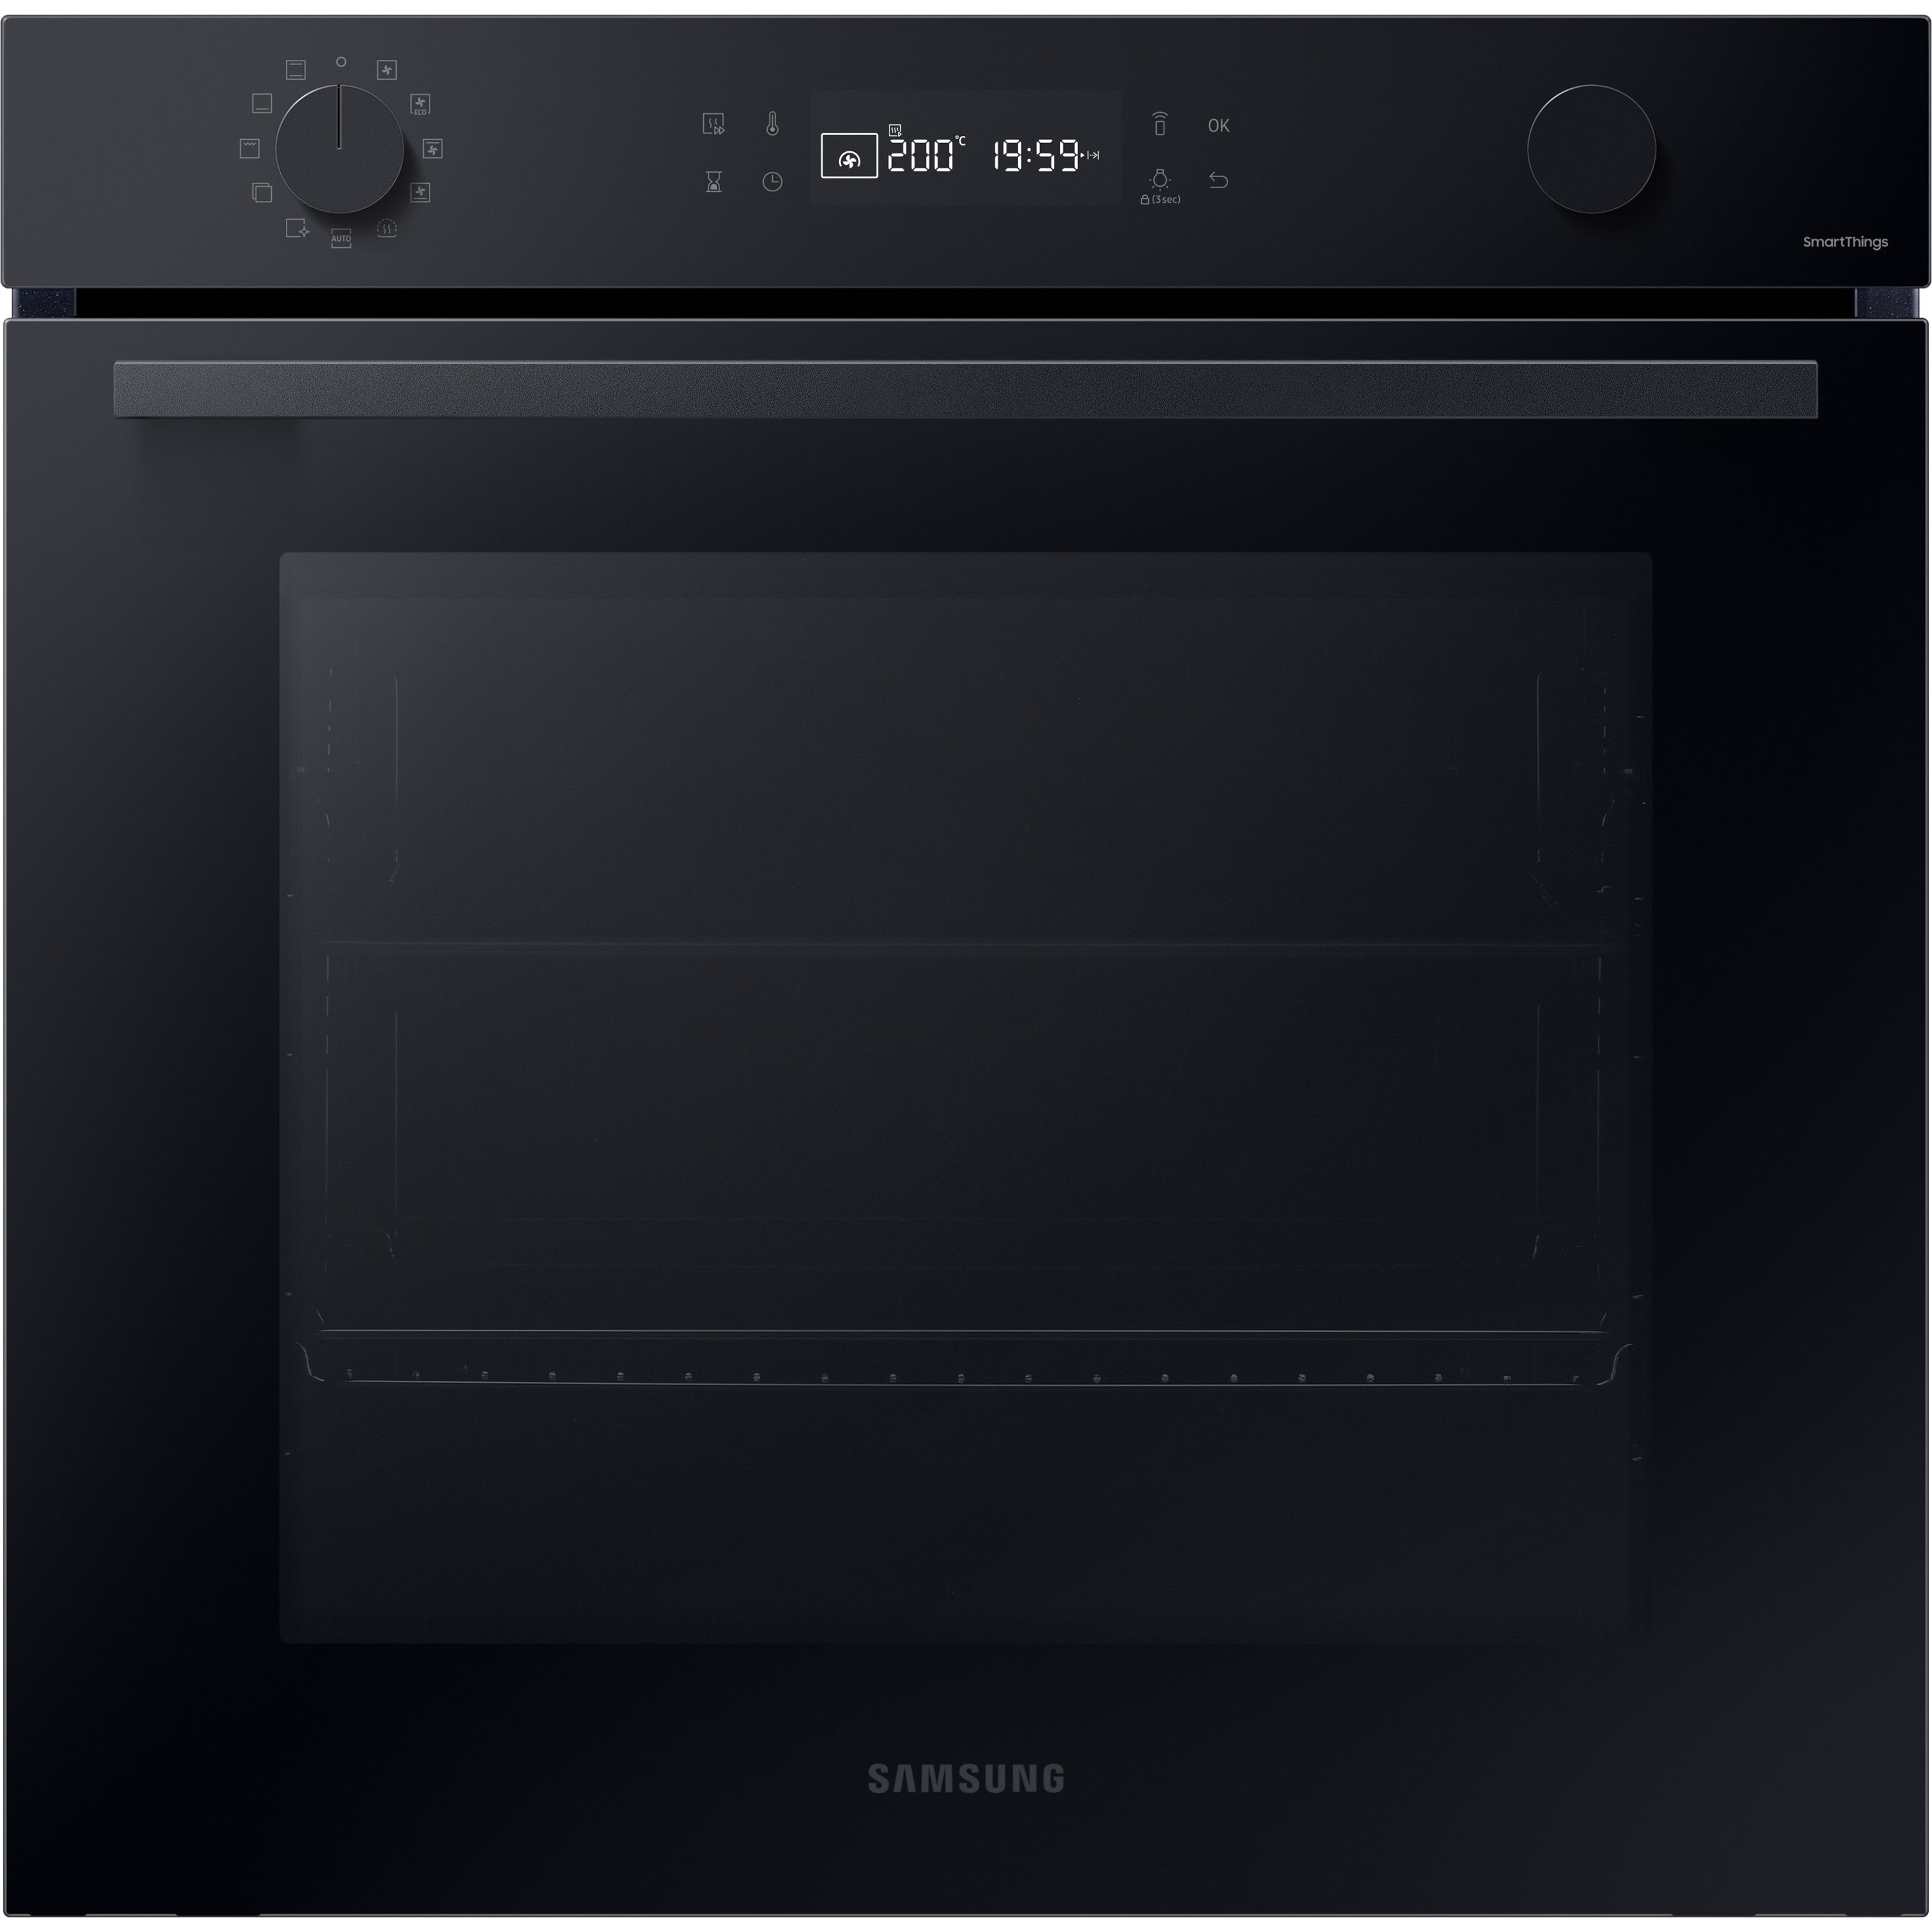 Samsung Bespoke Series 4 NV7B41307AK_BKG Built-in Single Multifunction Oven - Black